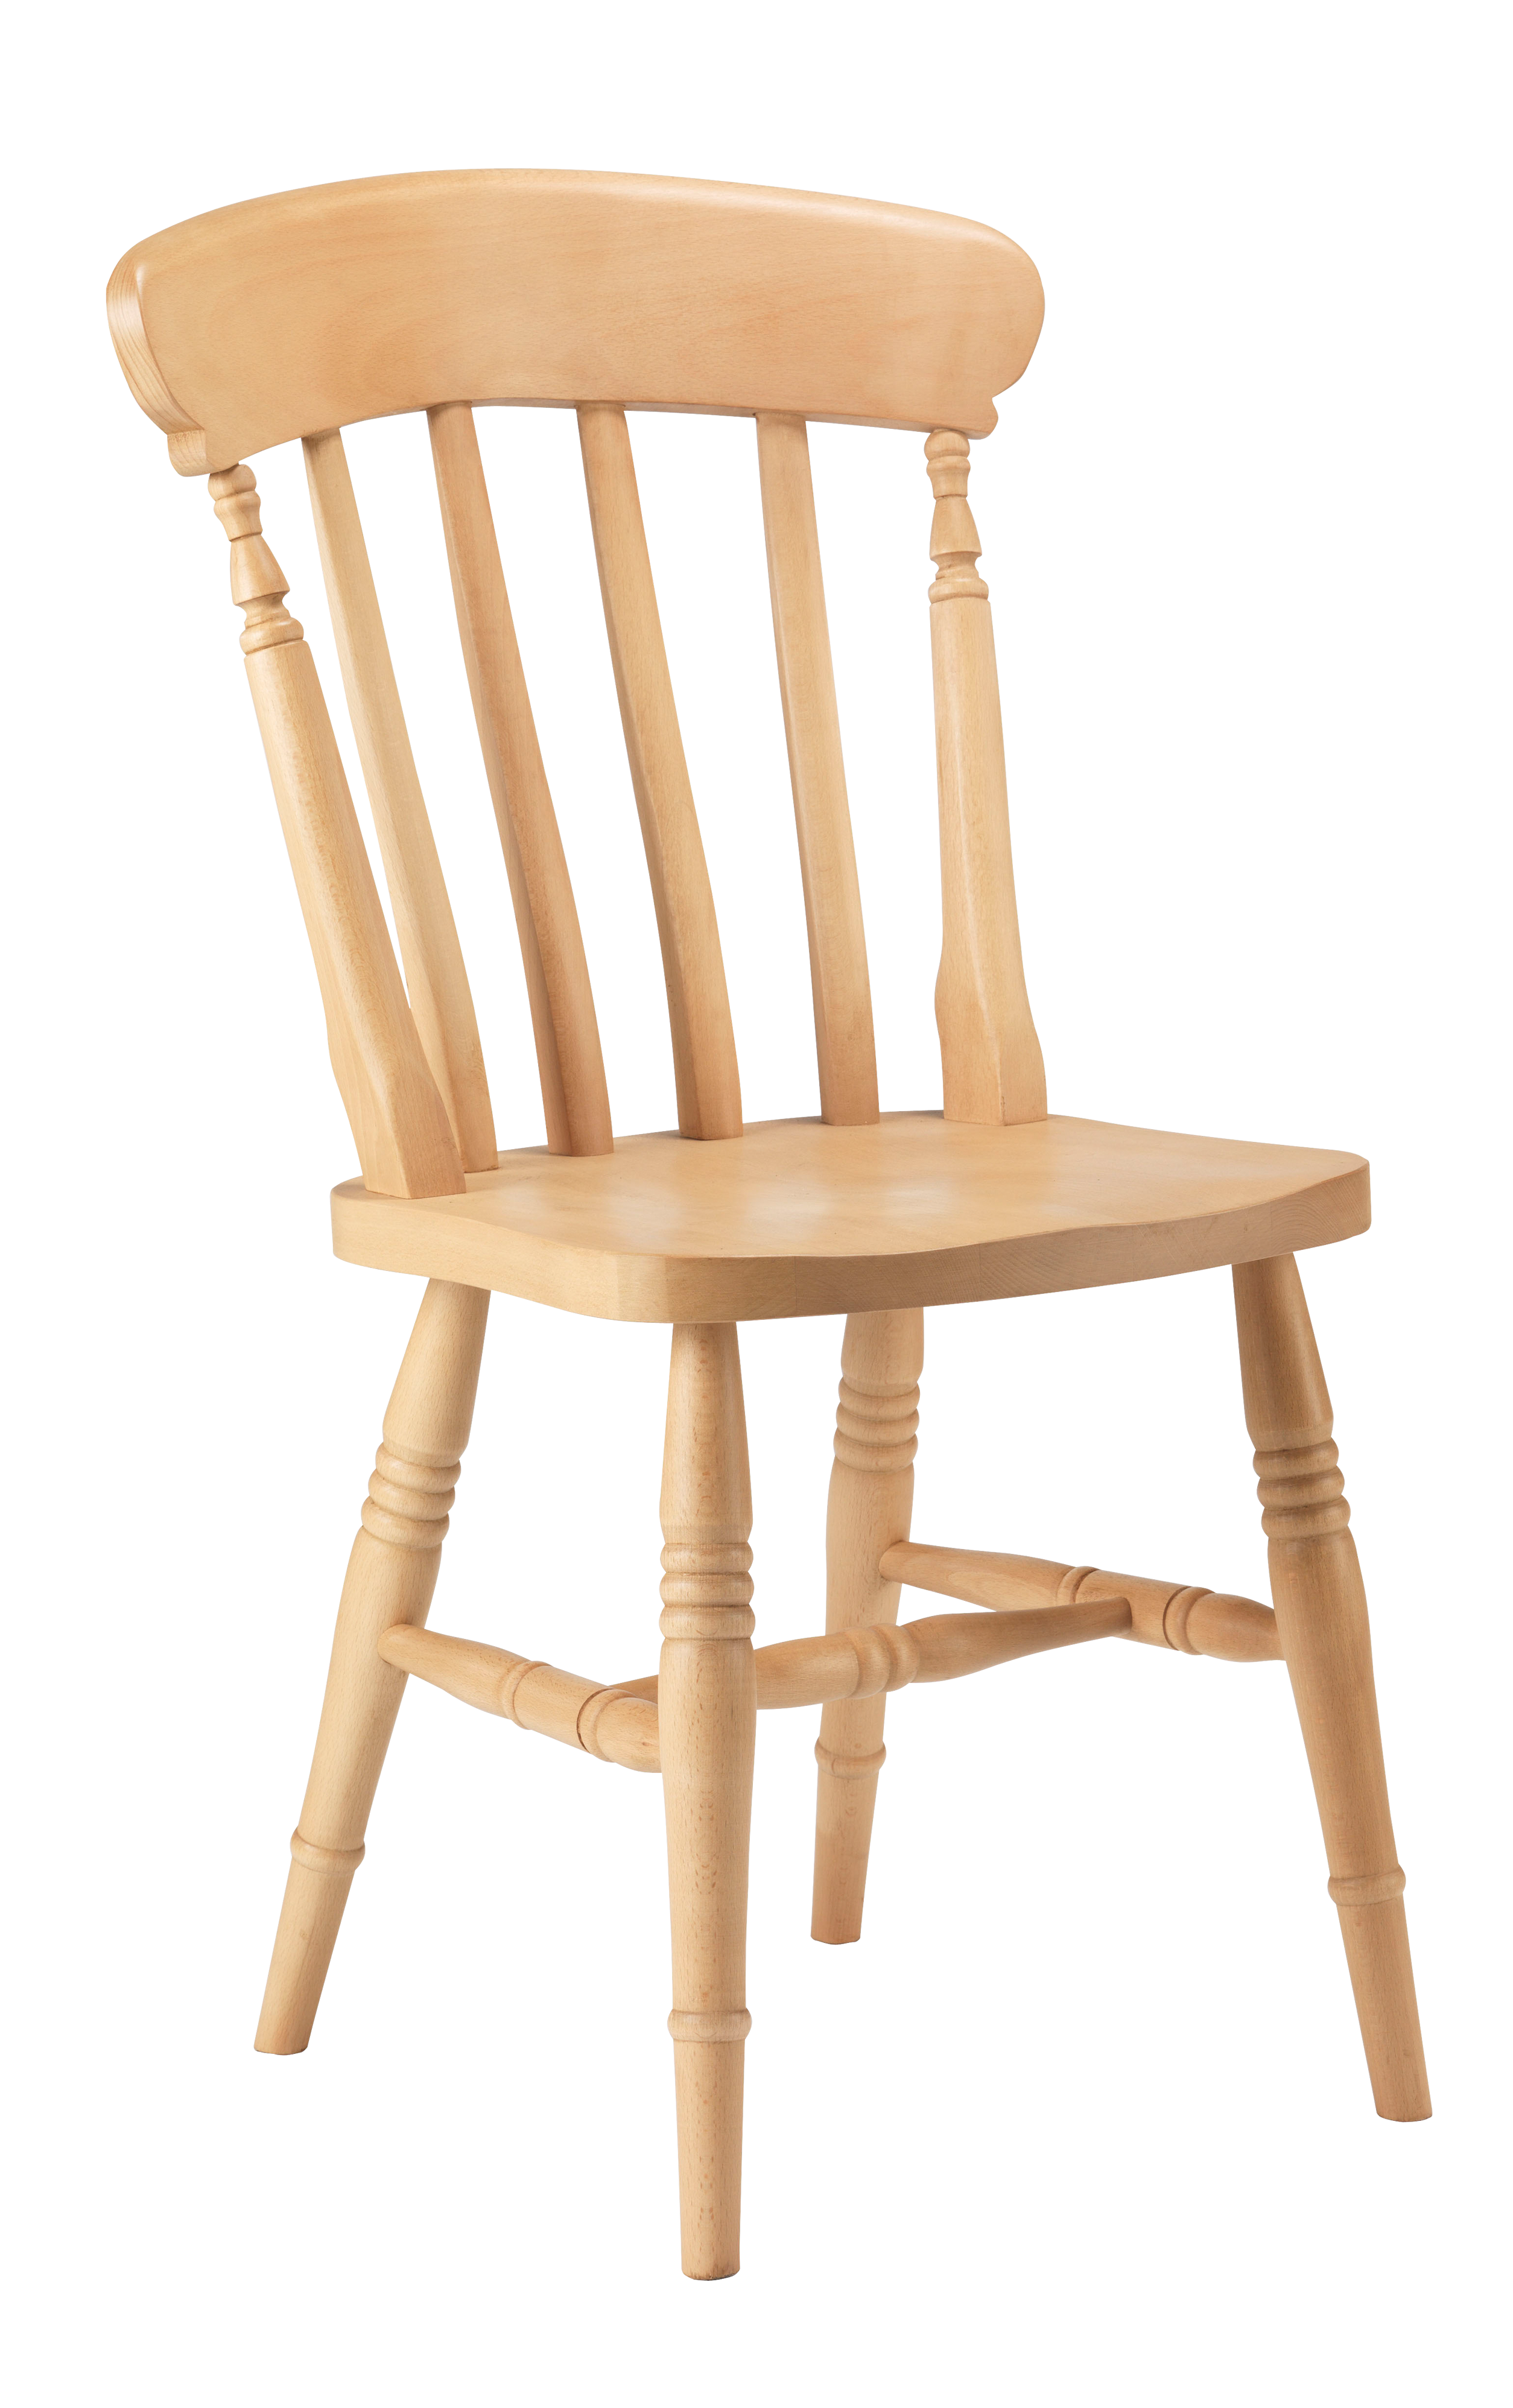 Chair Wooden PNG HD  pngteam.com